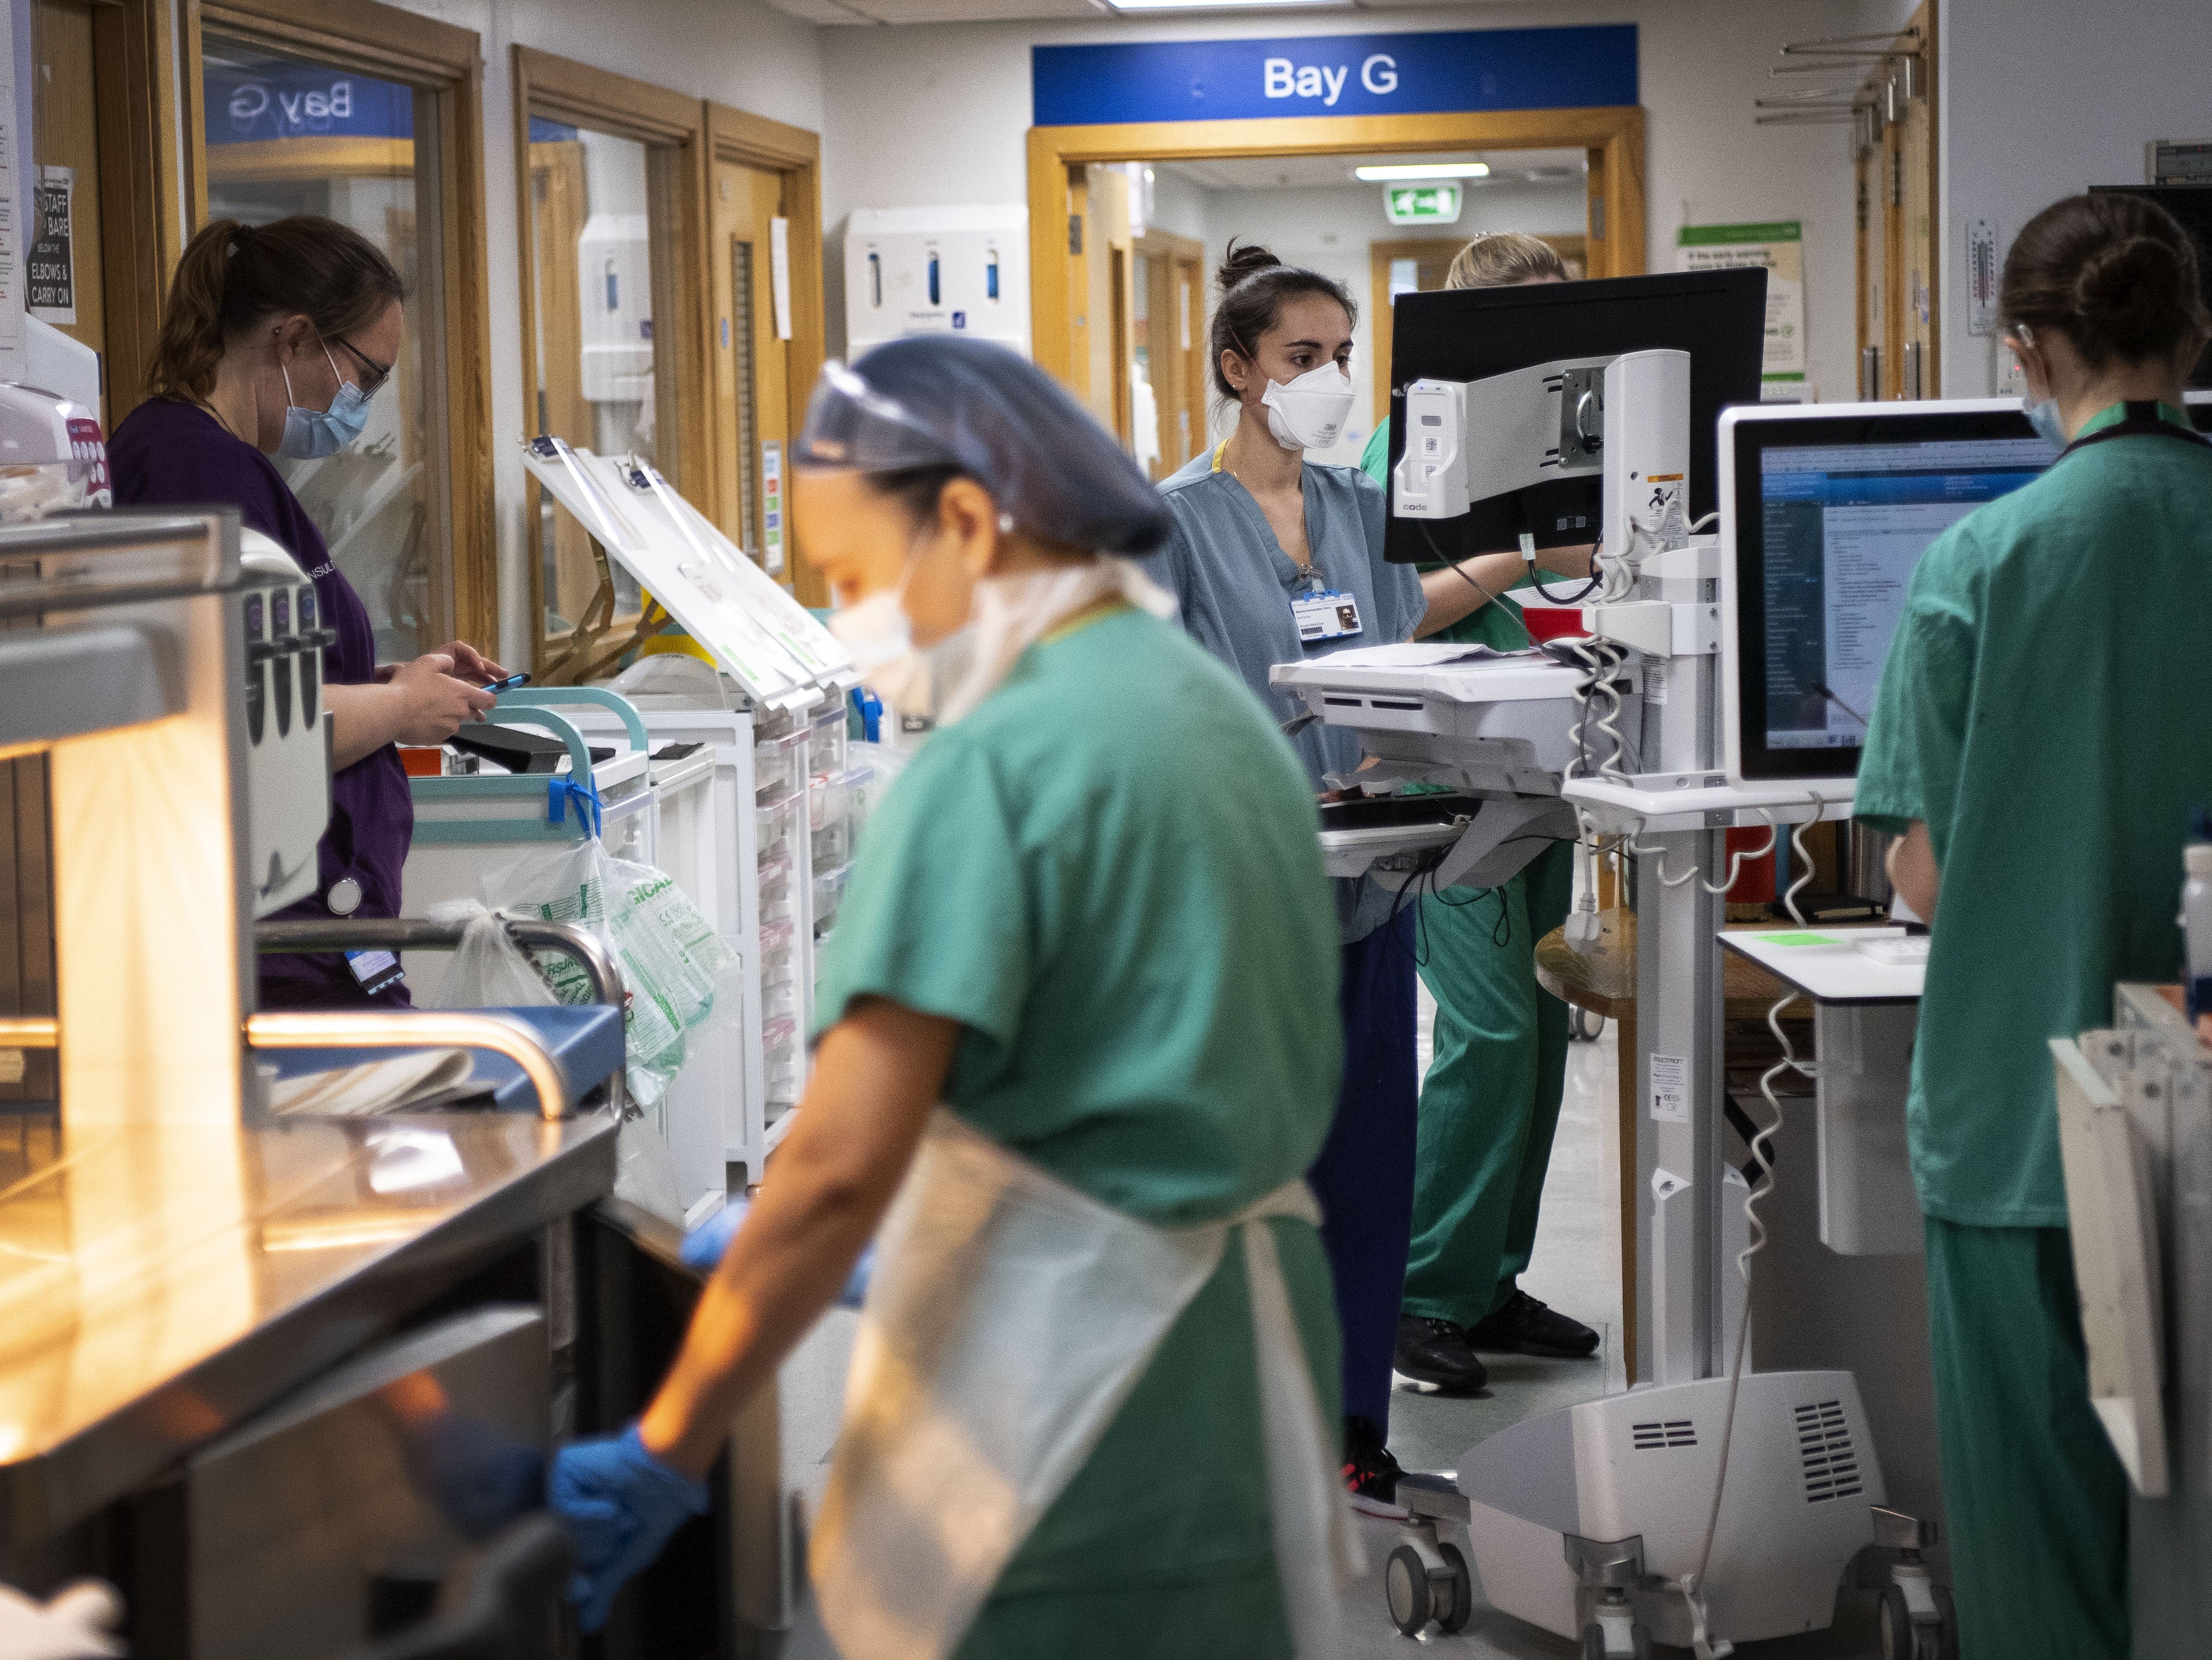 NHS staff working in hospital corridor